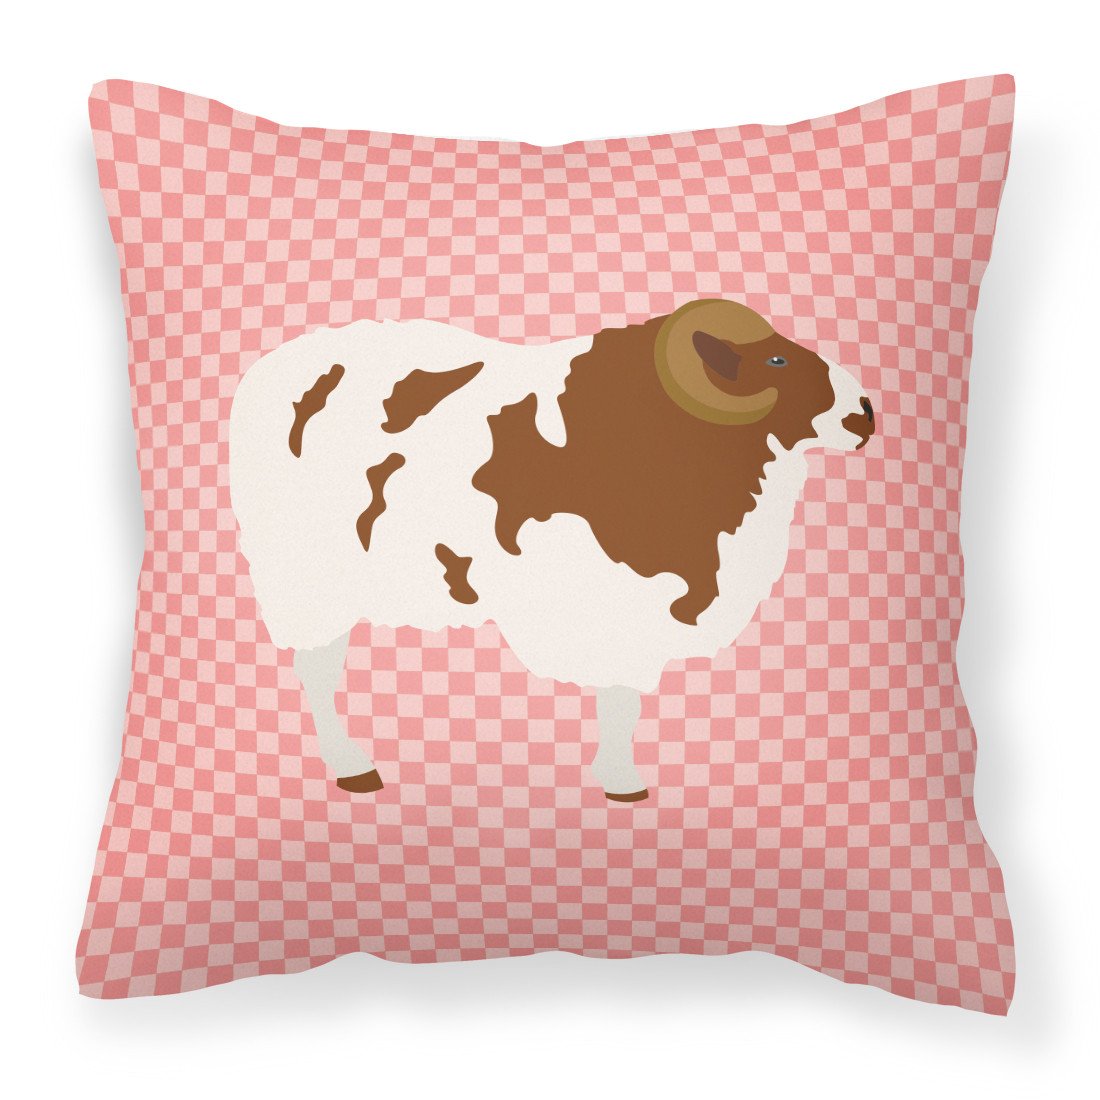 Jacob Sheep Pink Check Fabric Decorative Pillow BB7975PW1818 by Caroline's Treasures